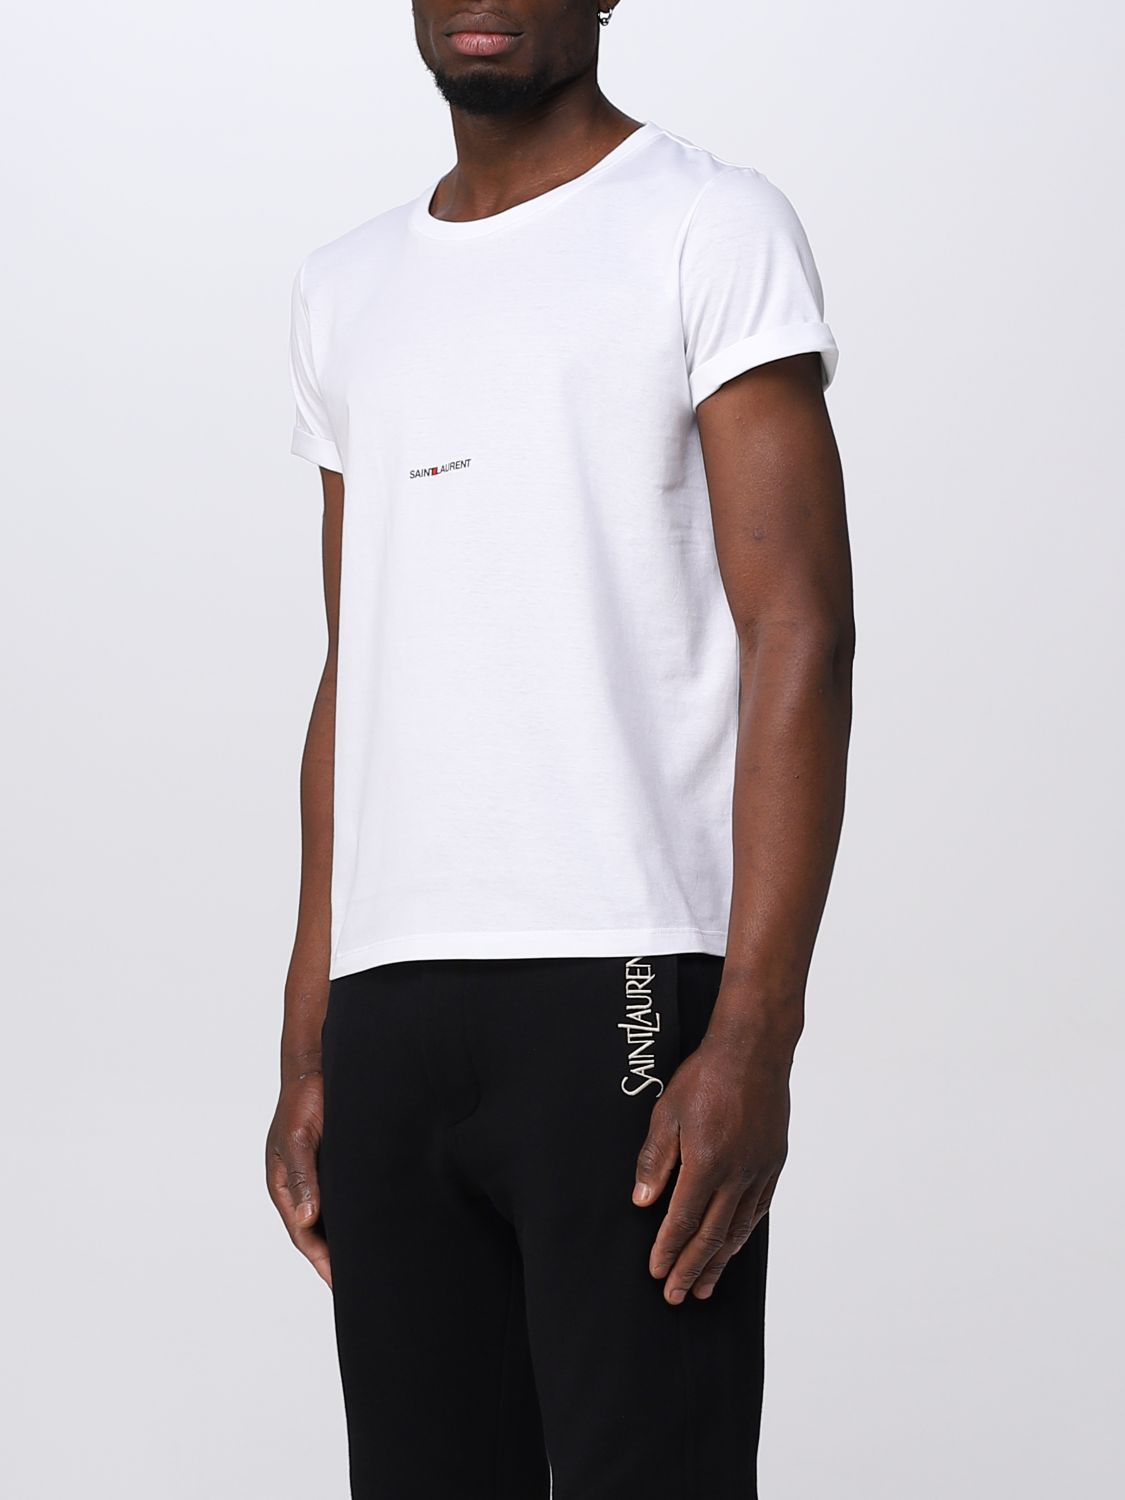 Saint Laurent: T-Shirt For Men - White | Saint Laurent T-Shirt 464572Yb2Dq  Online On Giglio.Com